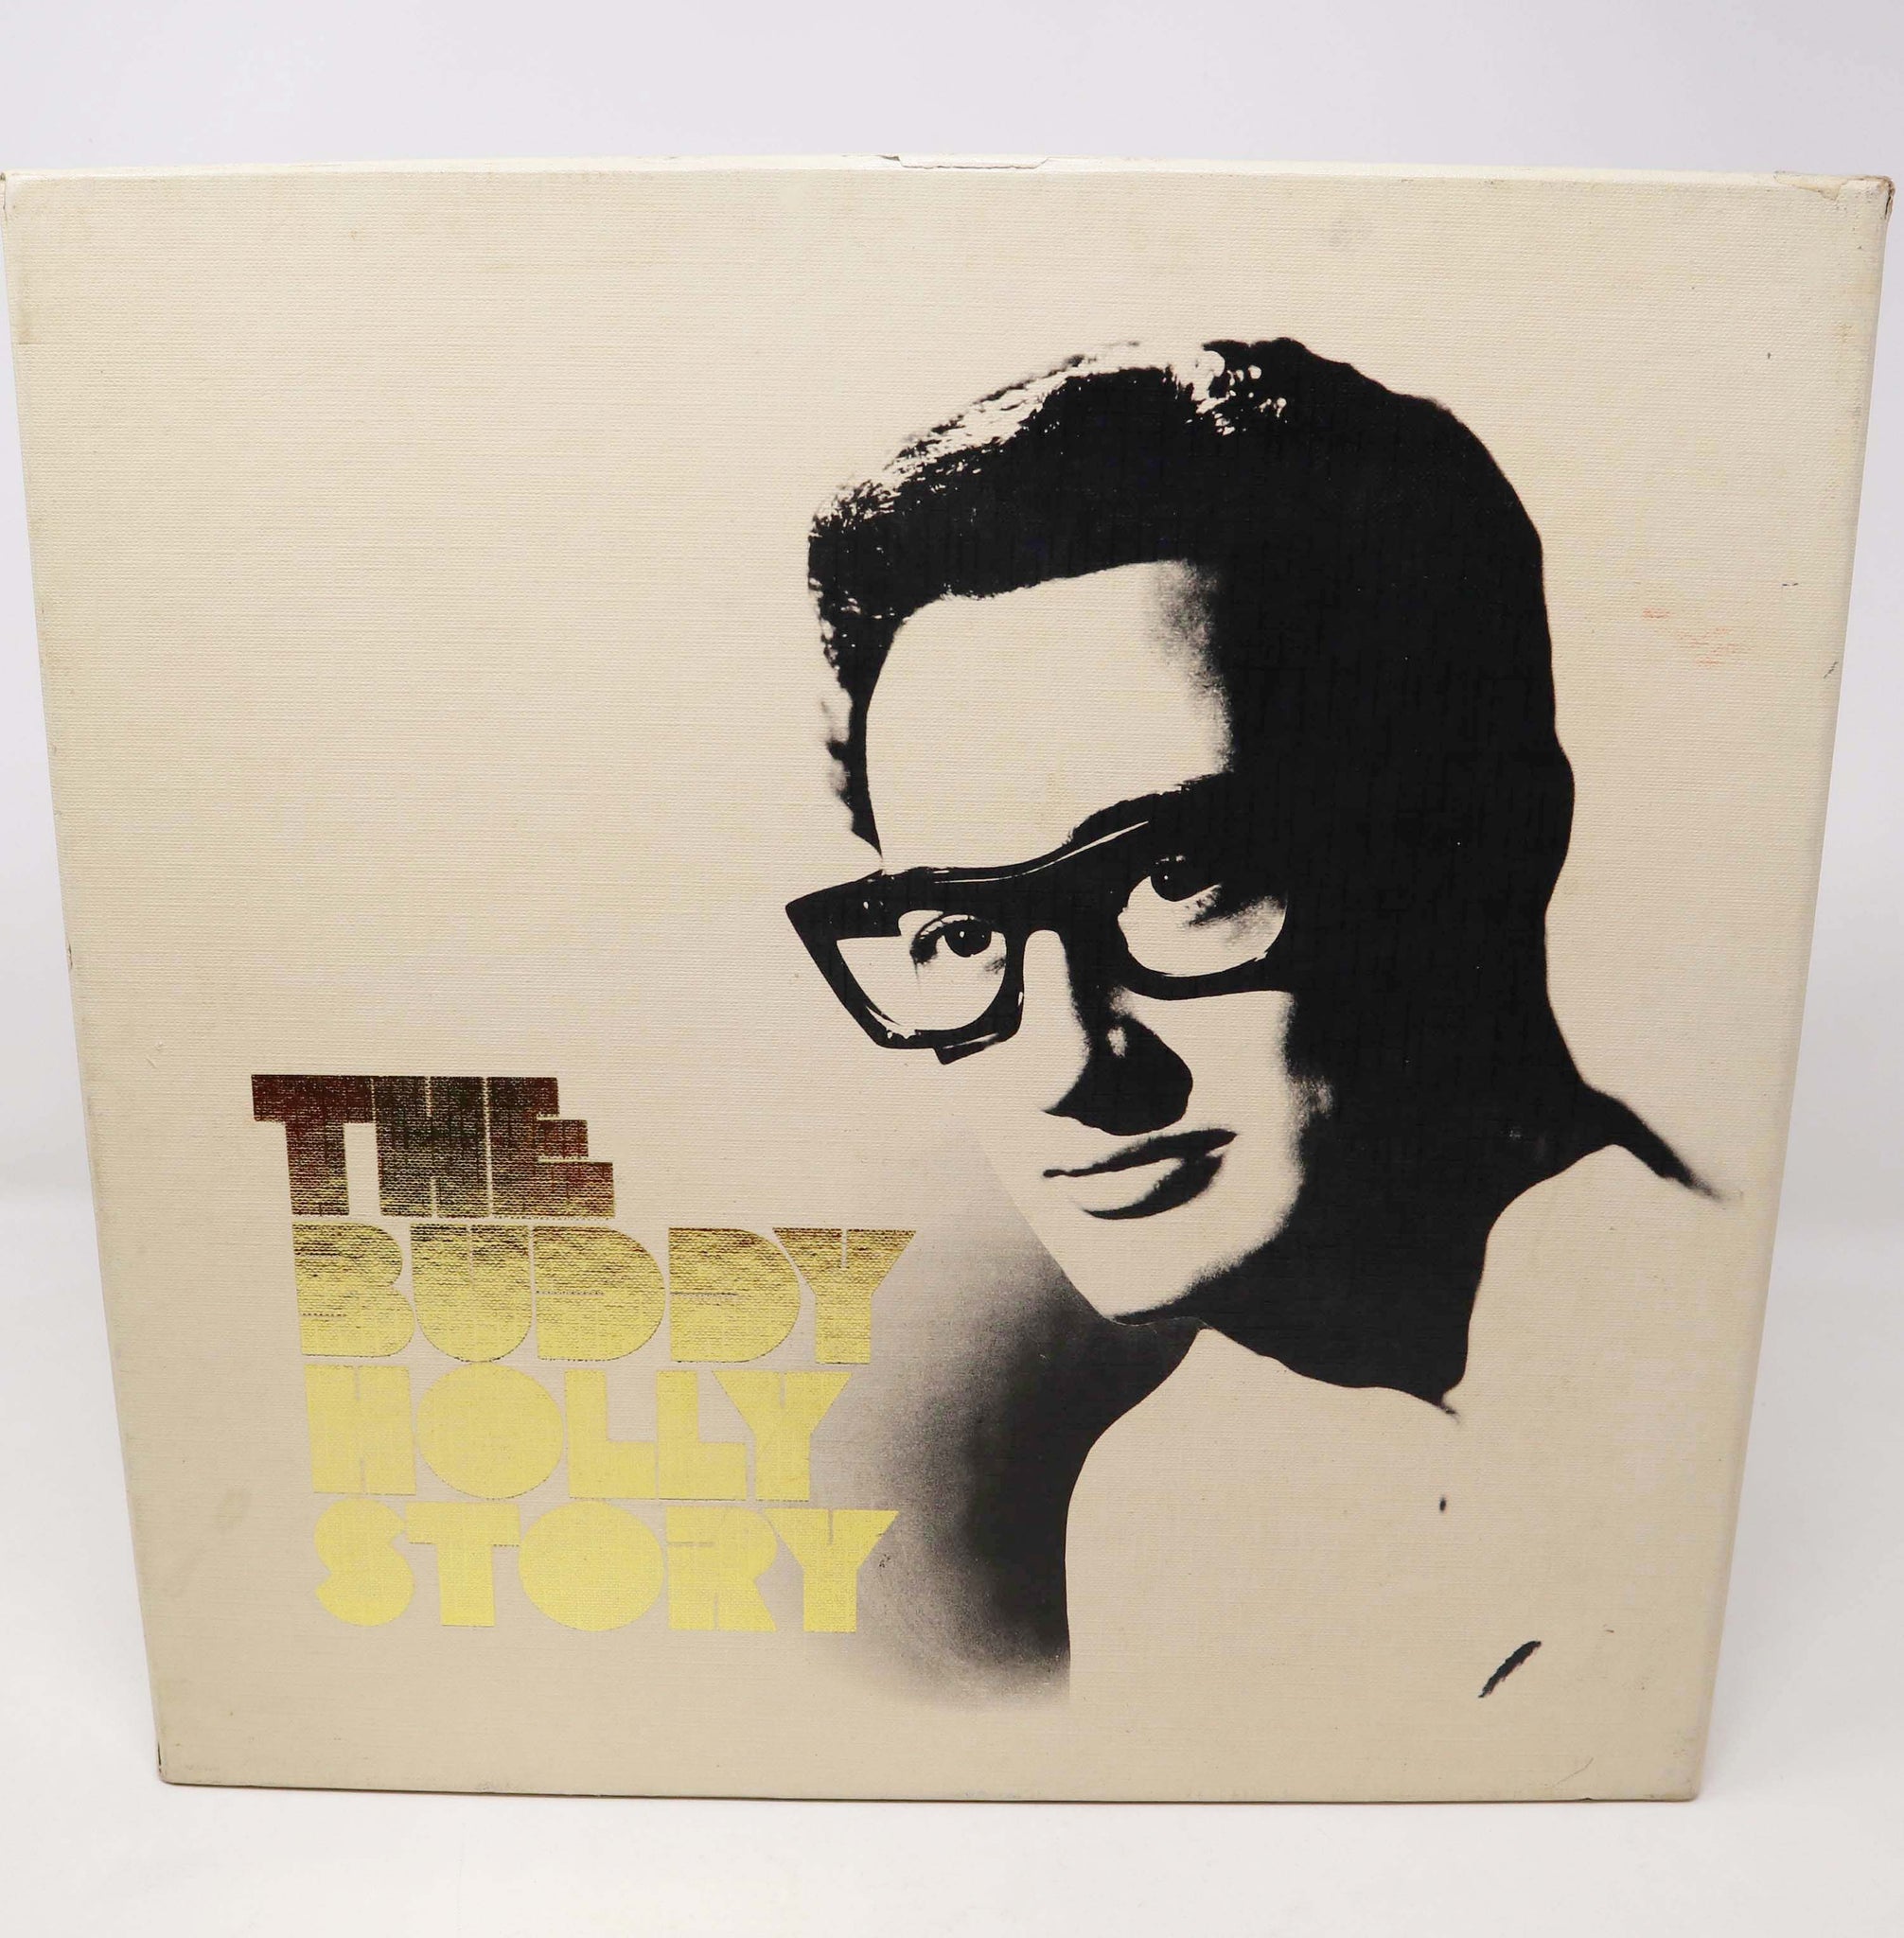 Vintage 1975 70s World Records The Buddy Holly Story 5 x LP Album Vinyl Record Boxset Boxed Rare